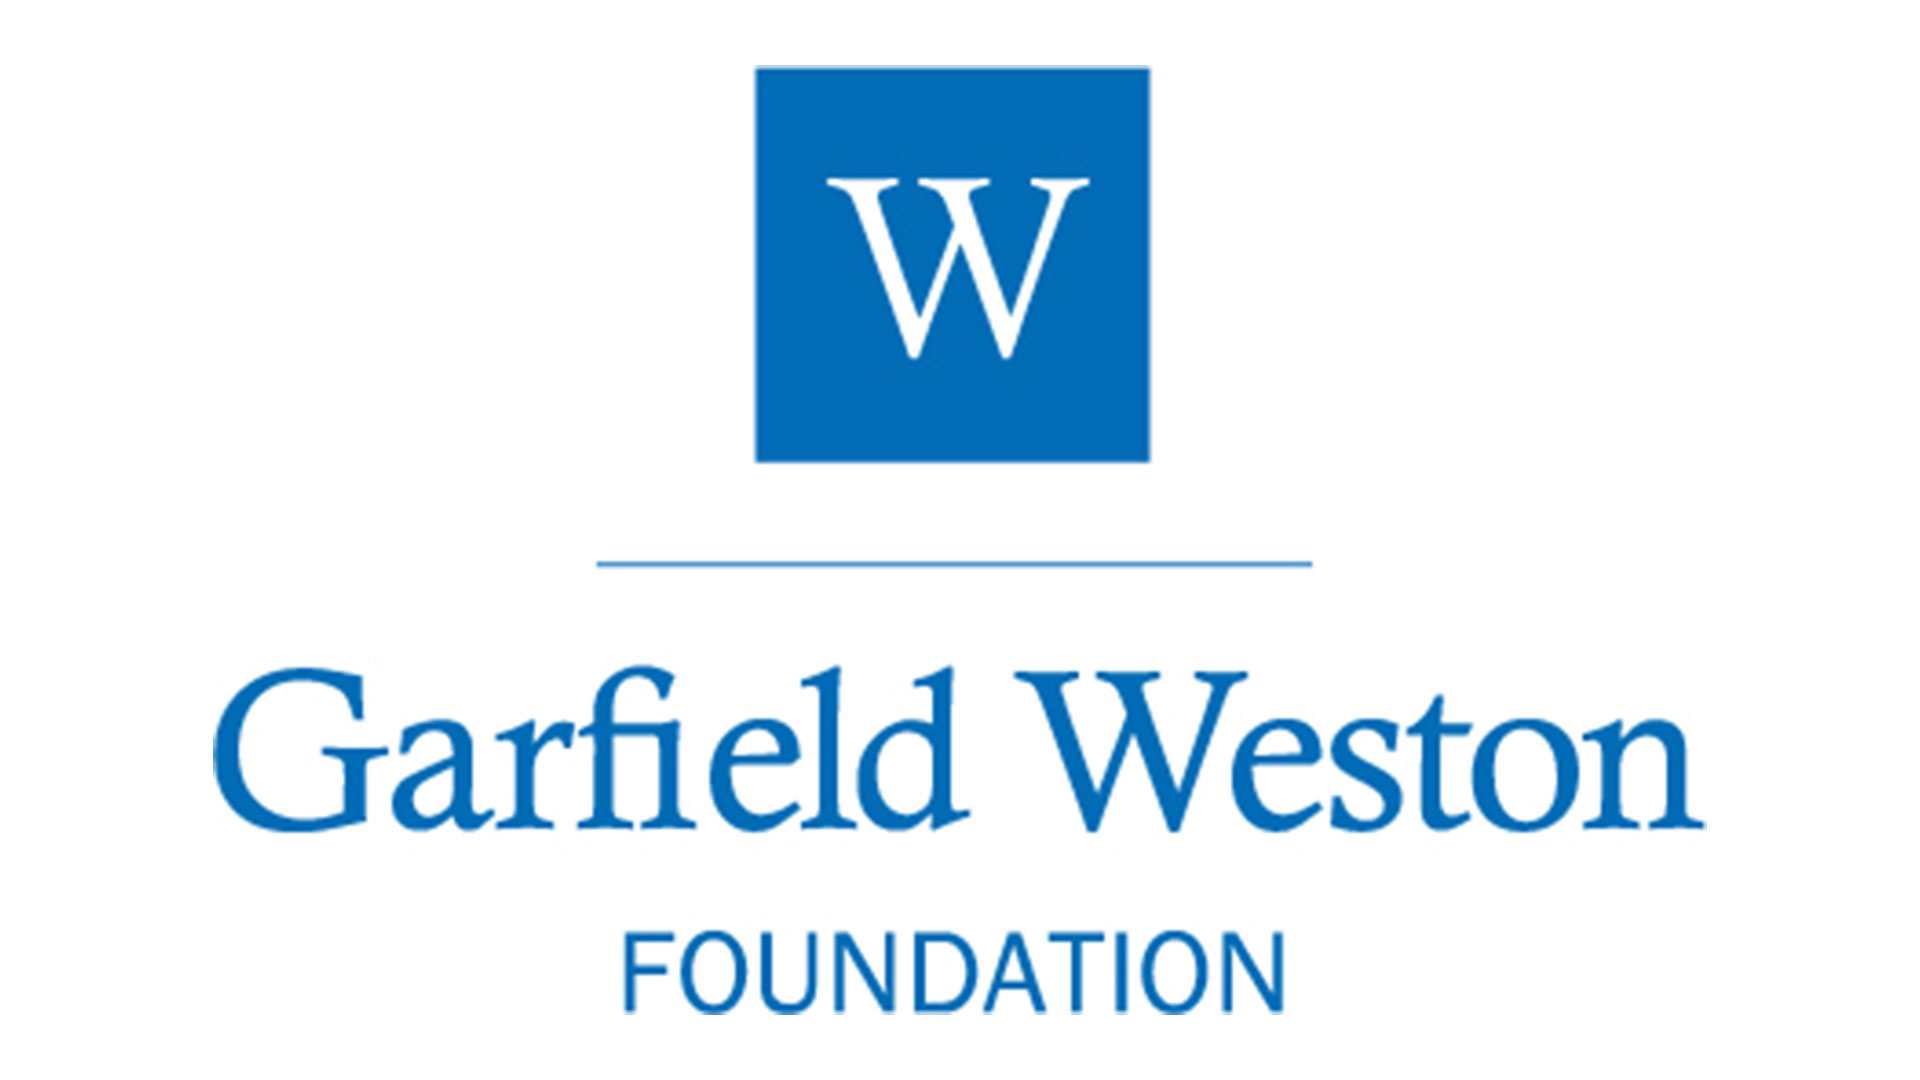 Garfield Weston Foundation logo.